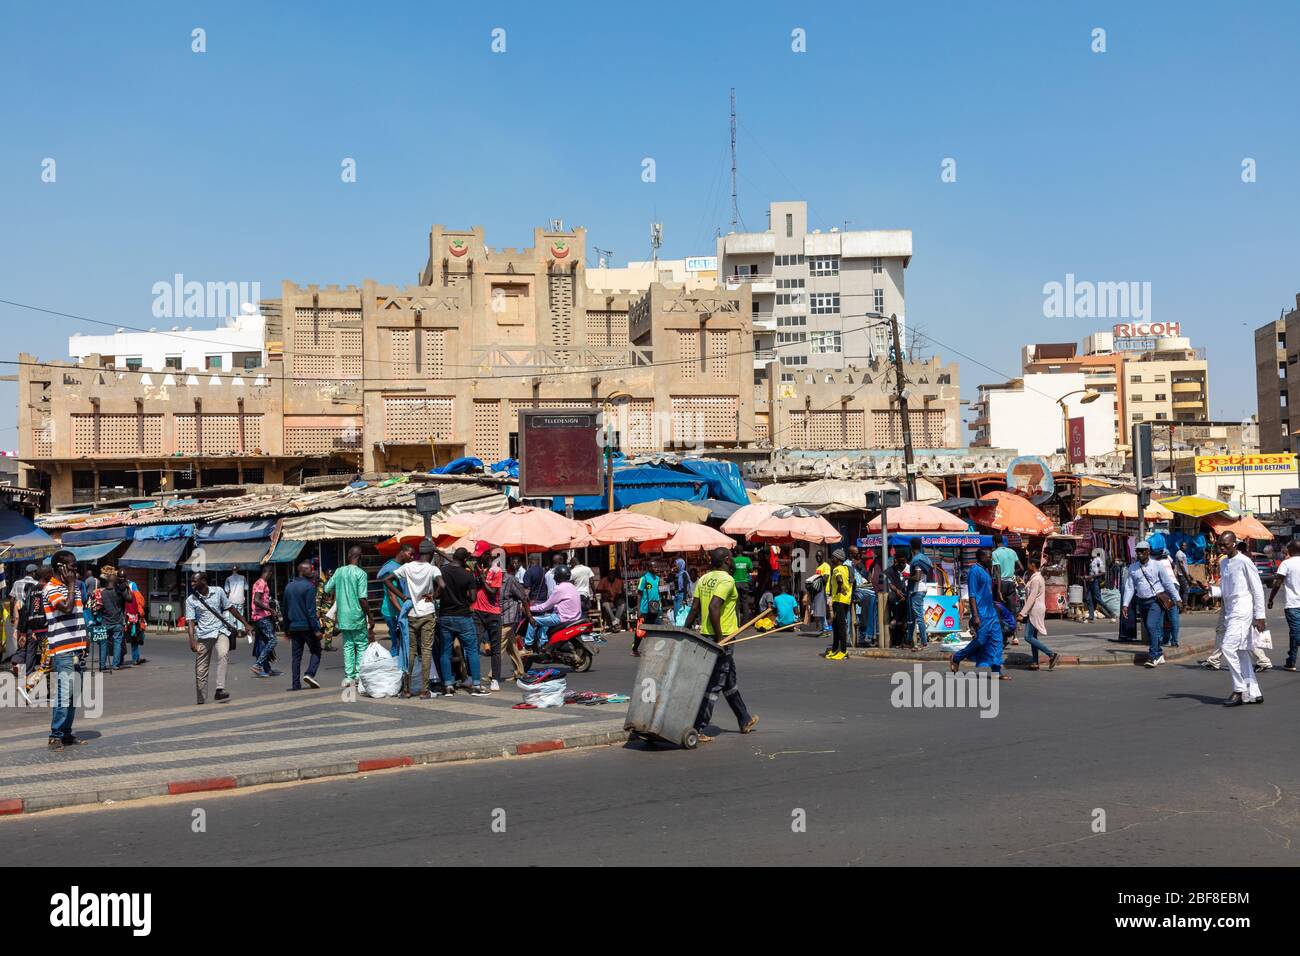 DAKAR, SENEGAL - NOVEMBER 11, 2019: People working and traffic at Senegal capital Dakar, West Africa. Stock Photo